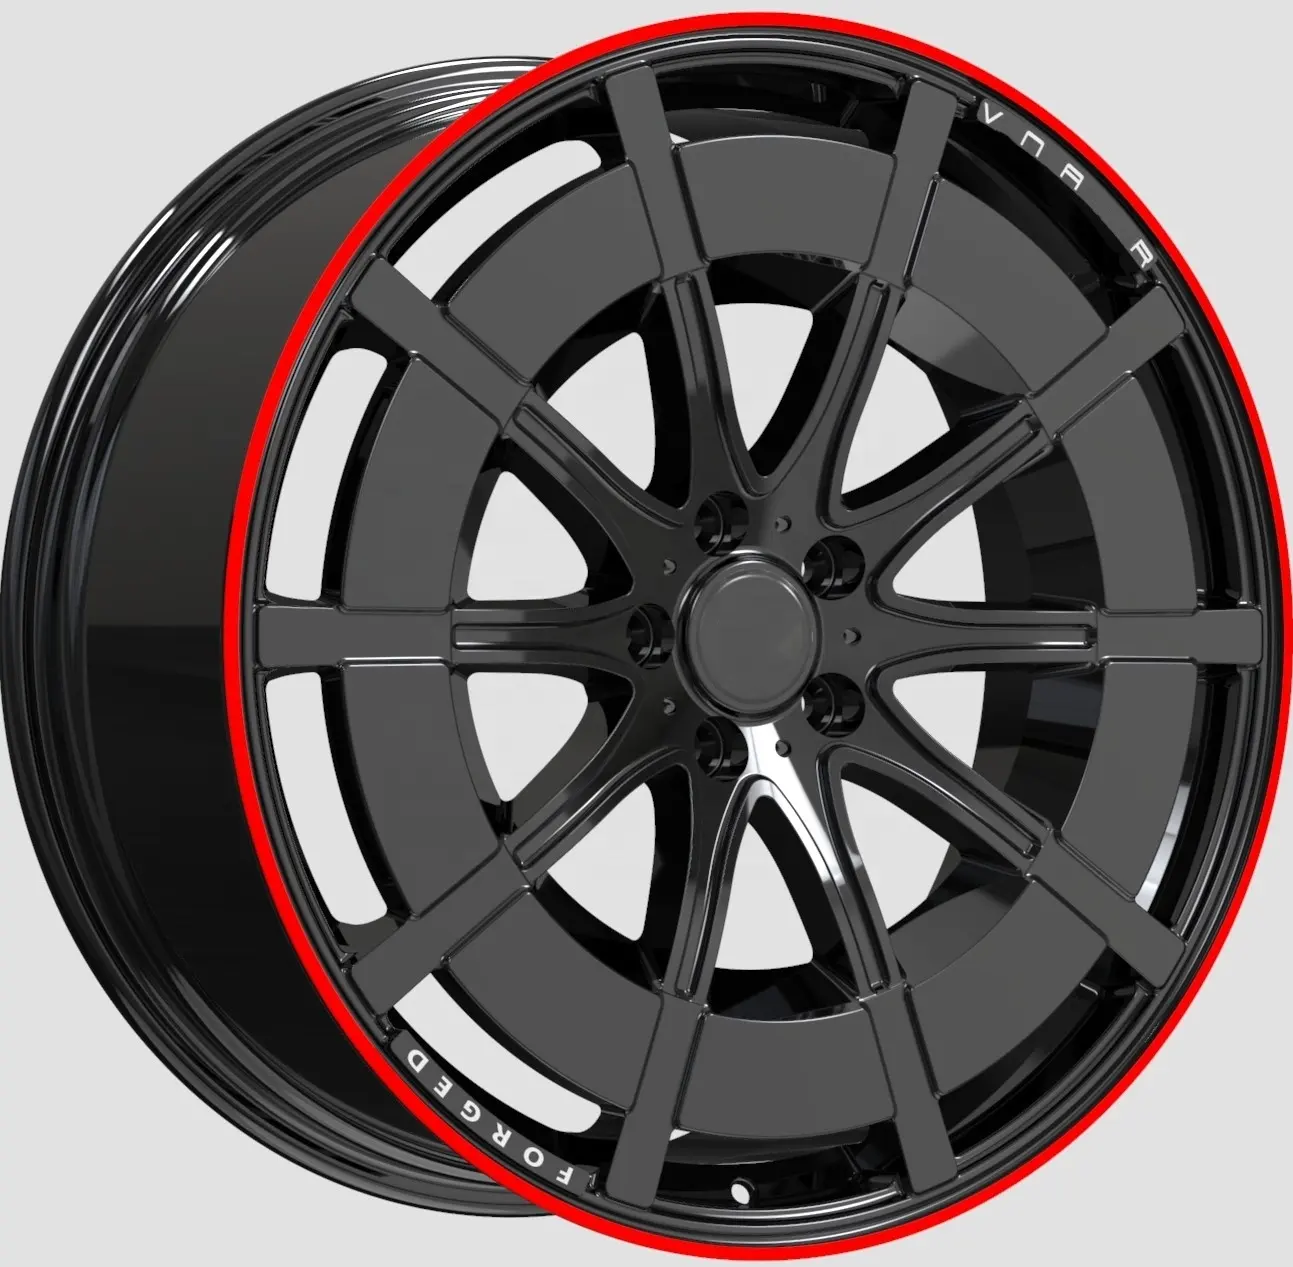 wheelux custom alloy forged wheels 21 22 23 24 inch wheels 5x130 5x112 carbon fiber cover for Mercedes Benz BRABUS G63 AMG G50